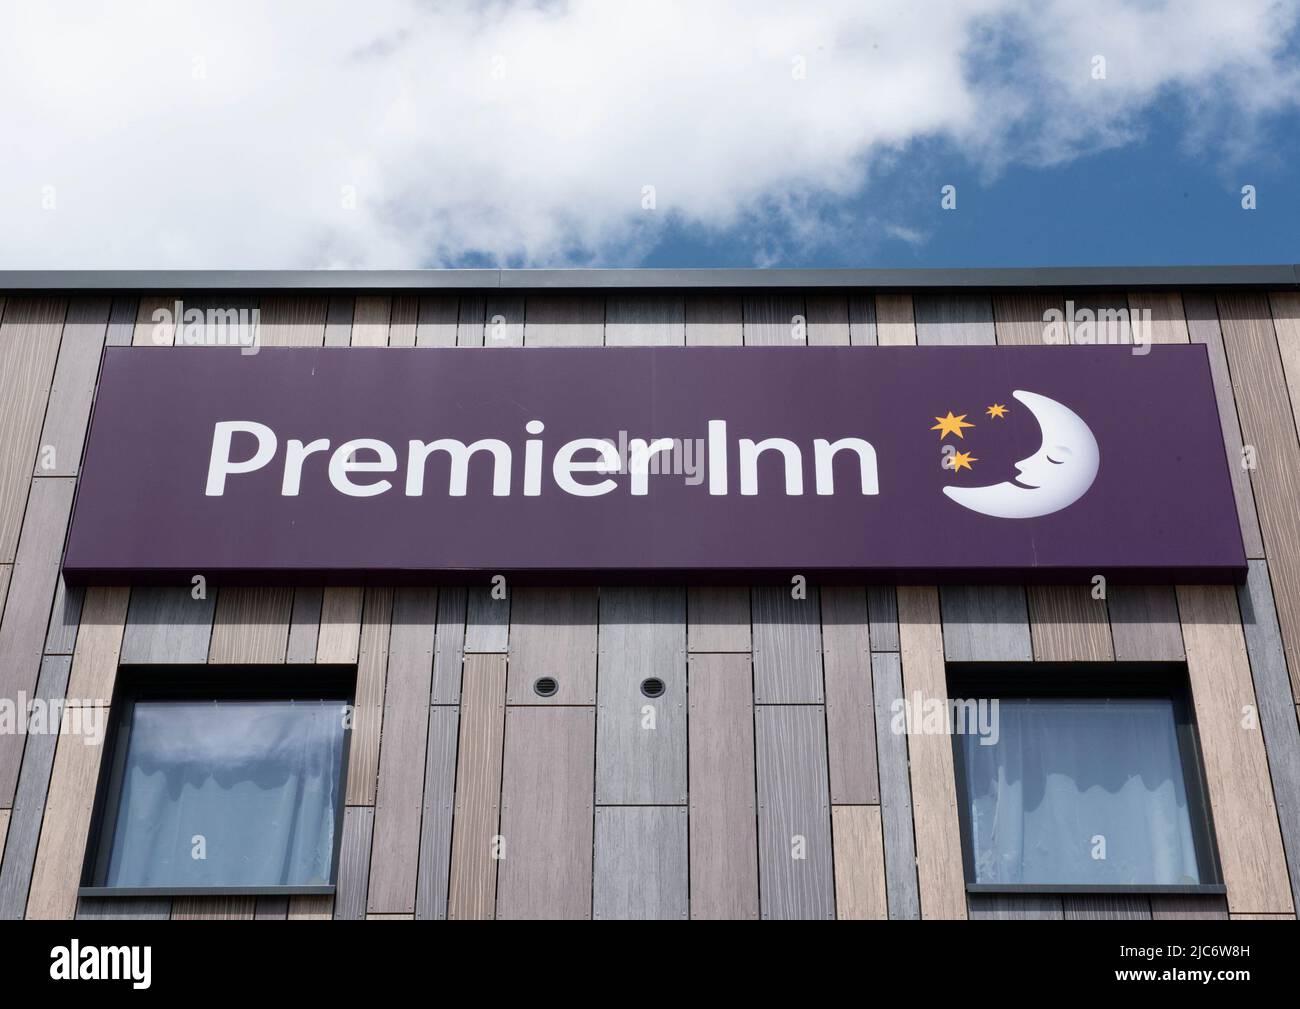 Premier Inn signage Stock Photo